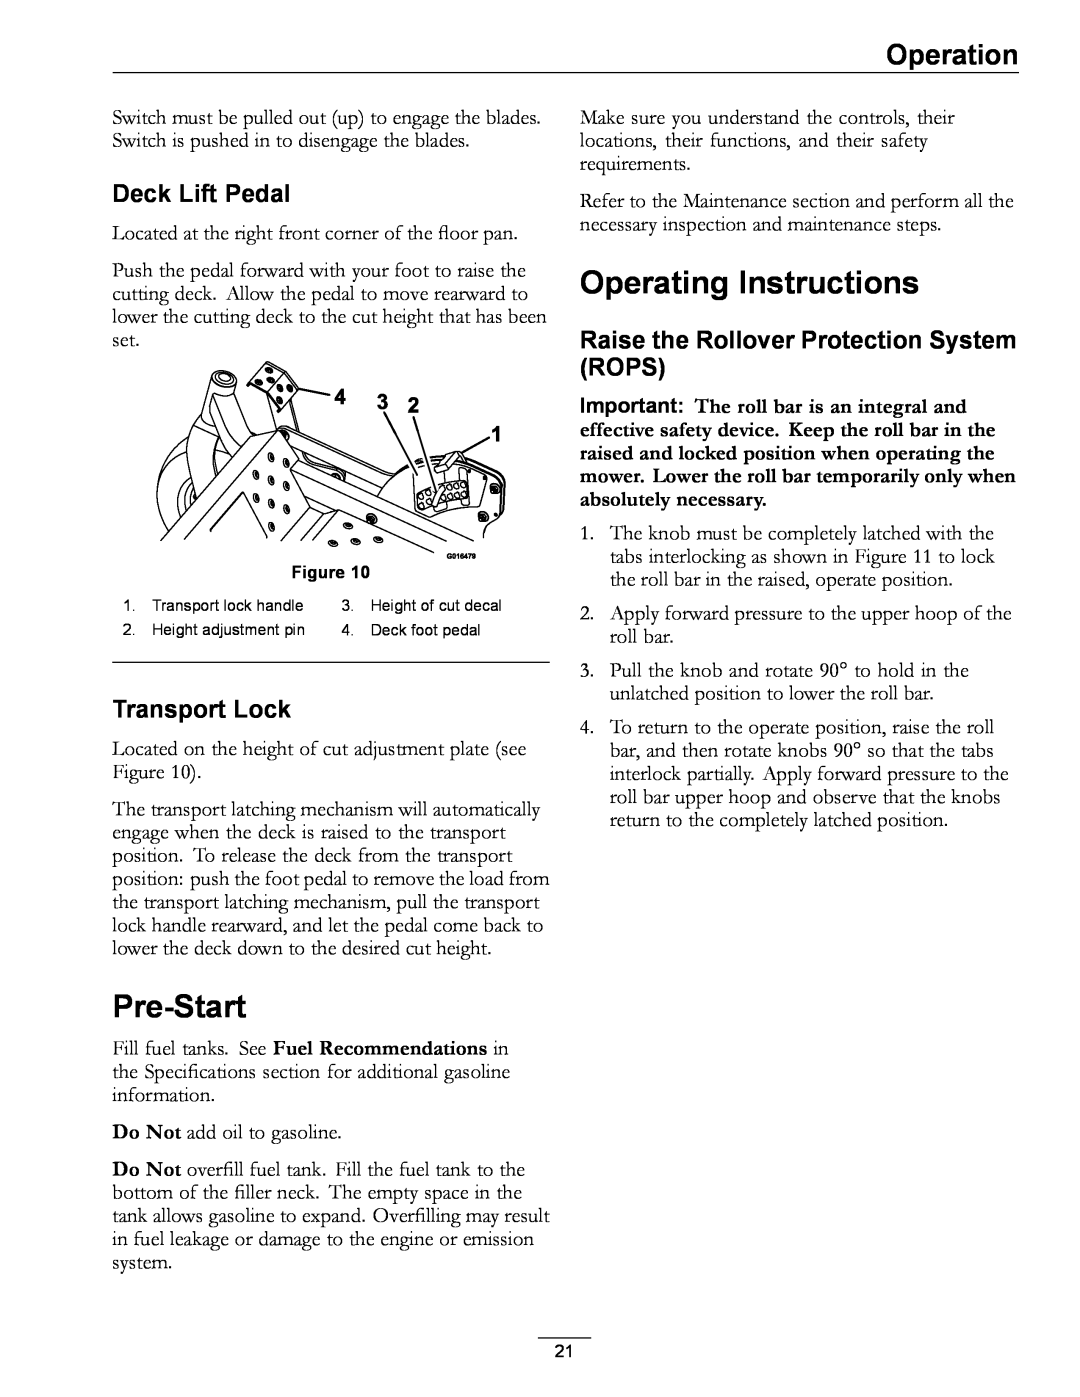 Exmark 4500-996 Rev A manual Pre-Start, Operating Instructions, Deck Lift Pedal, Transport Lock, Operation 